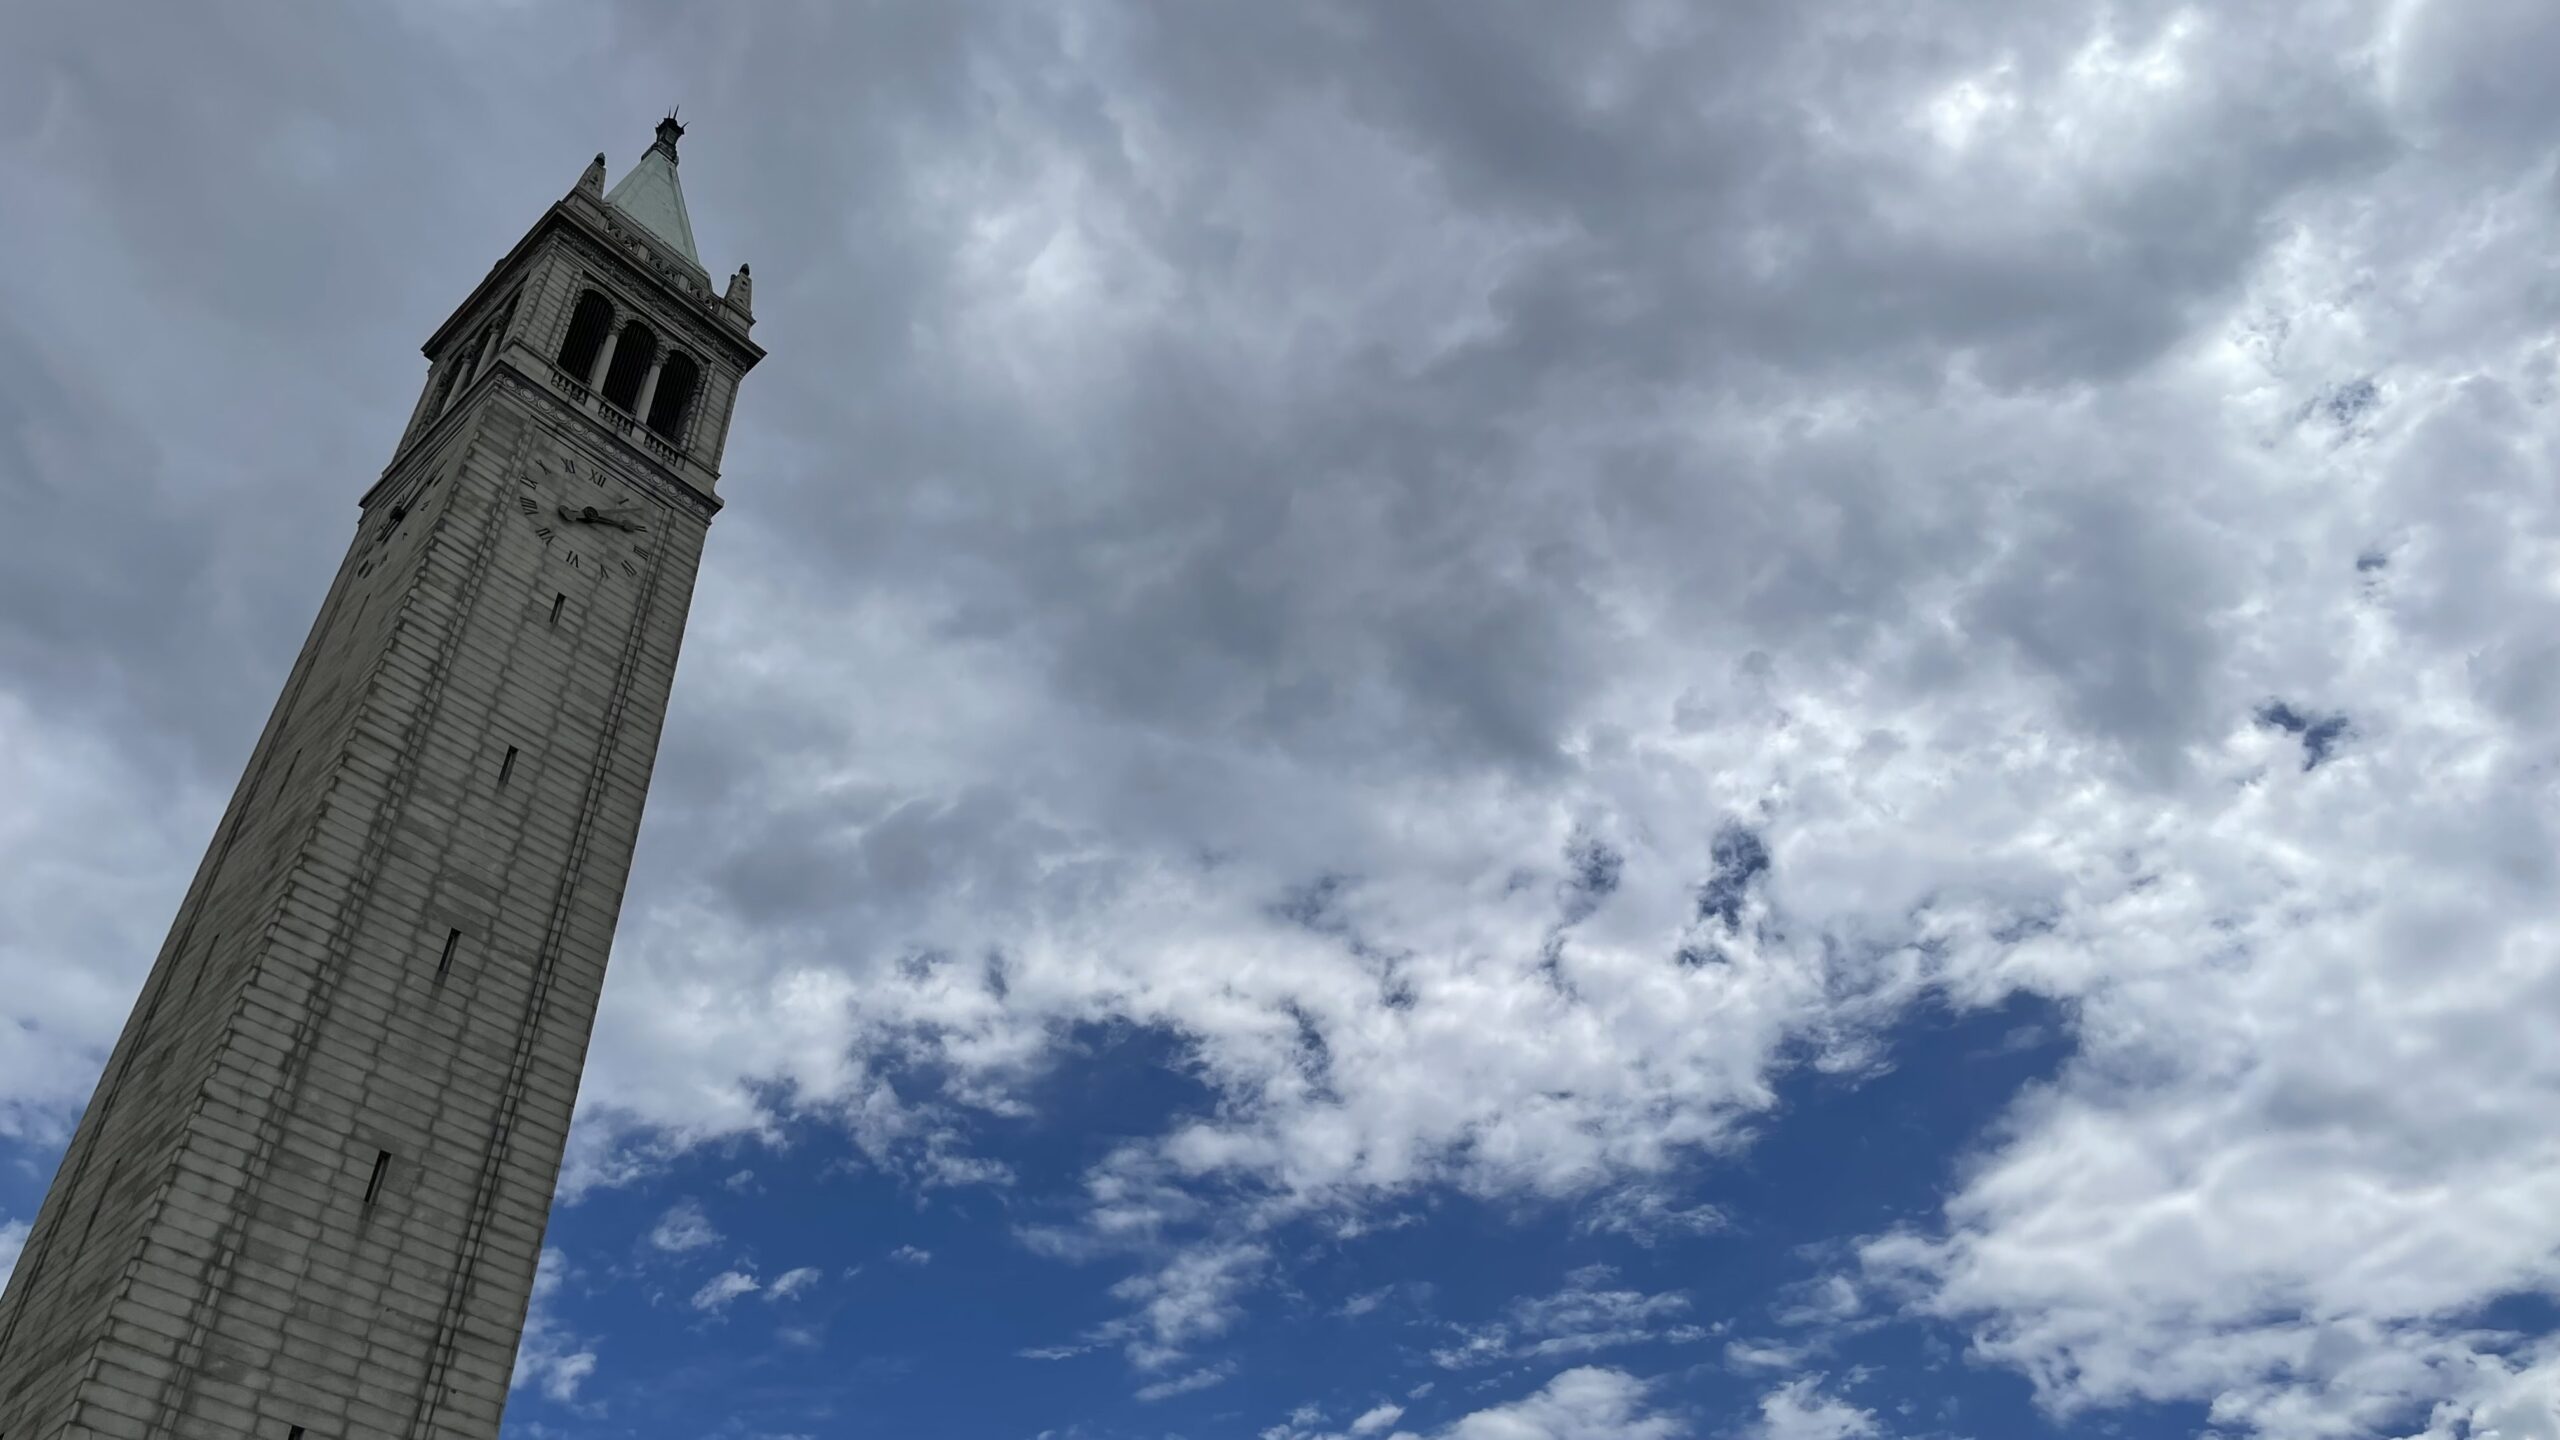 photo of UC Berkeley's campanile clock tower